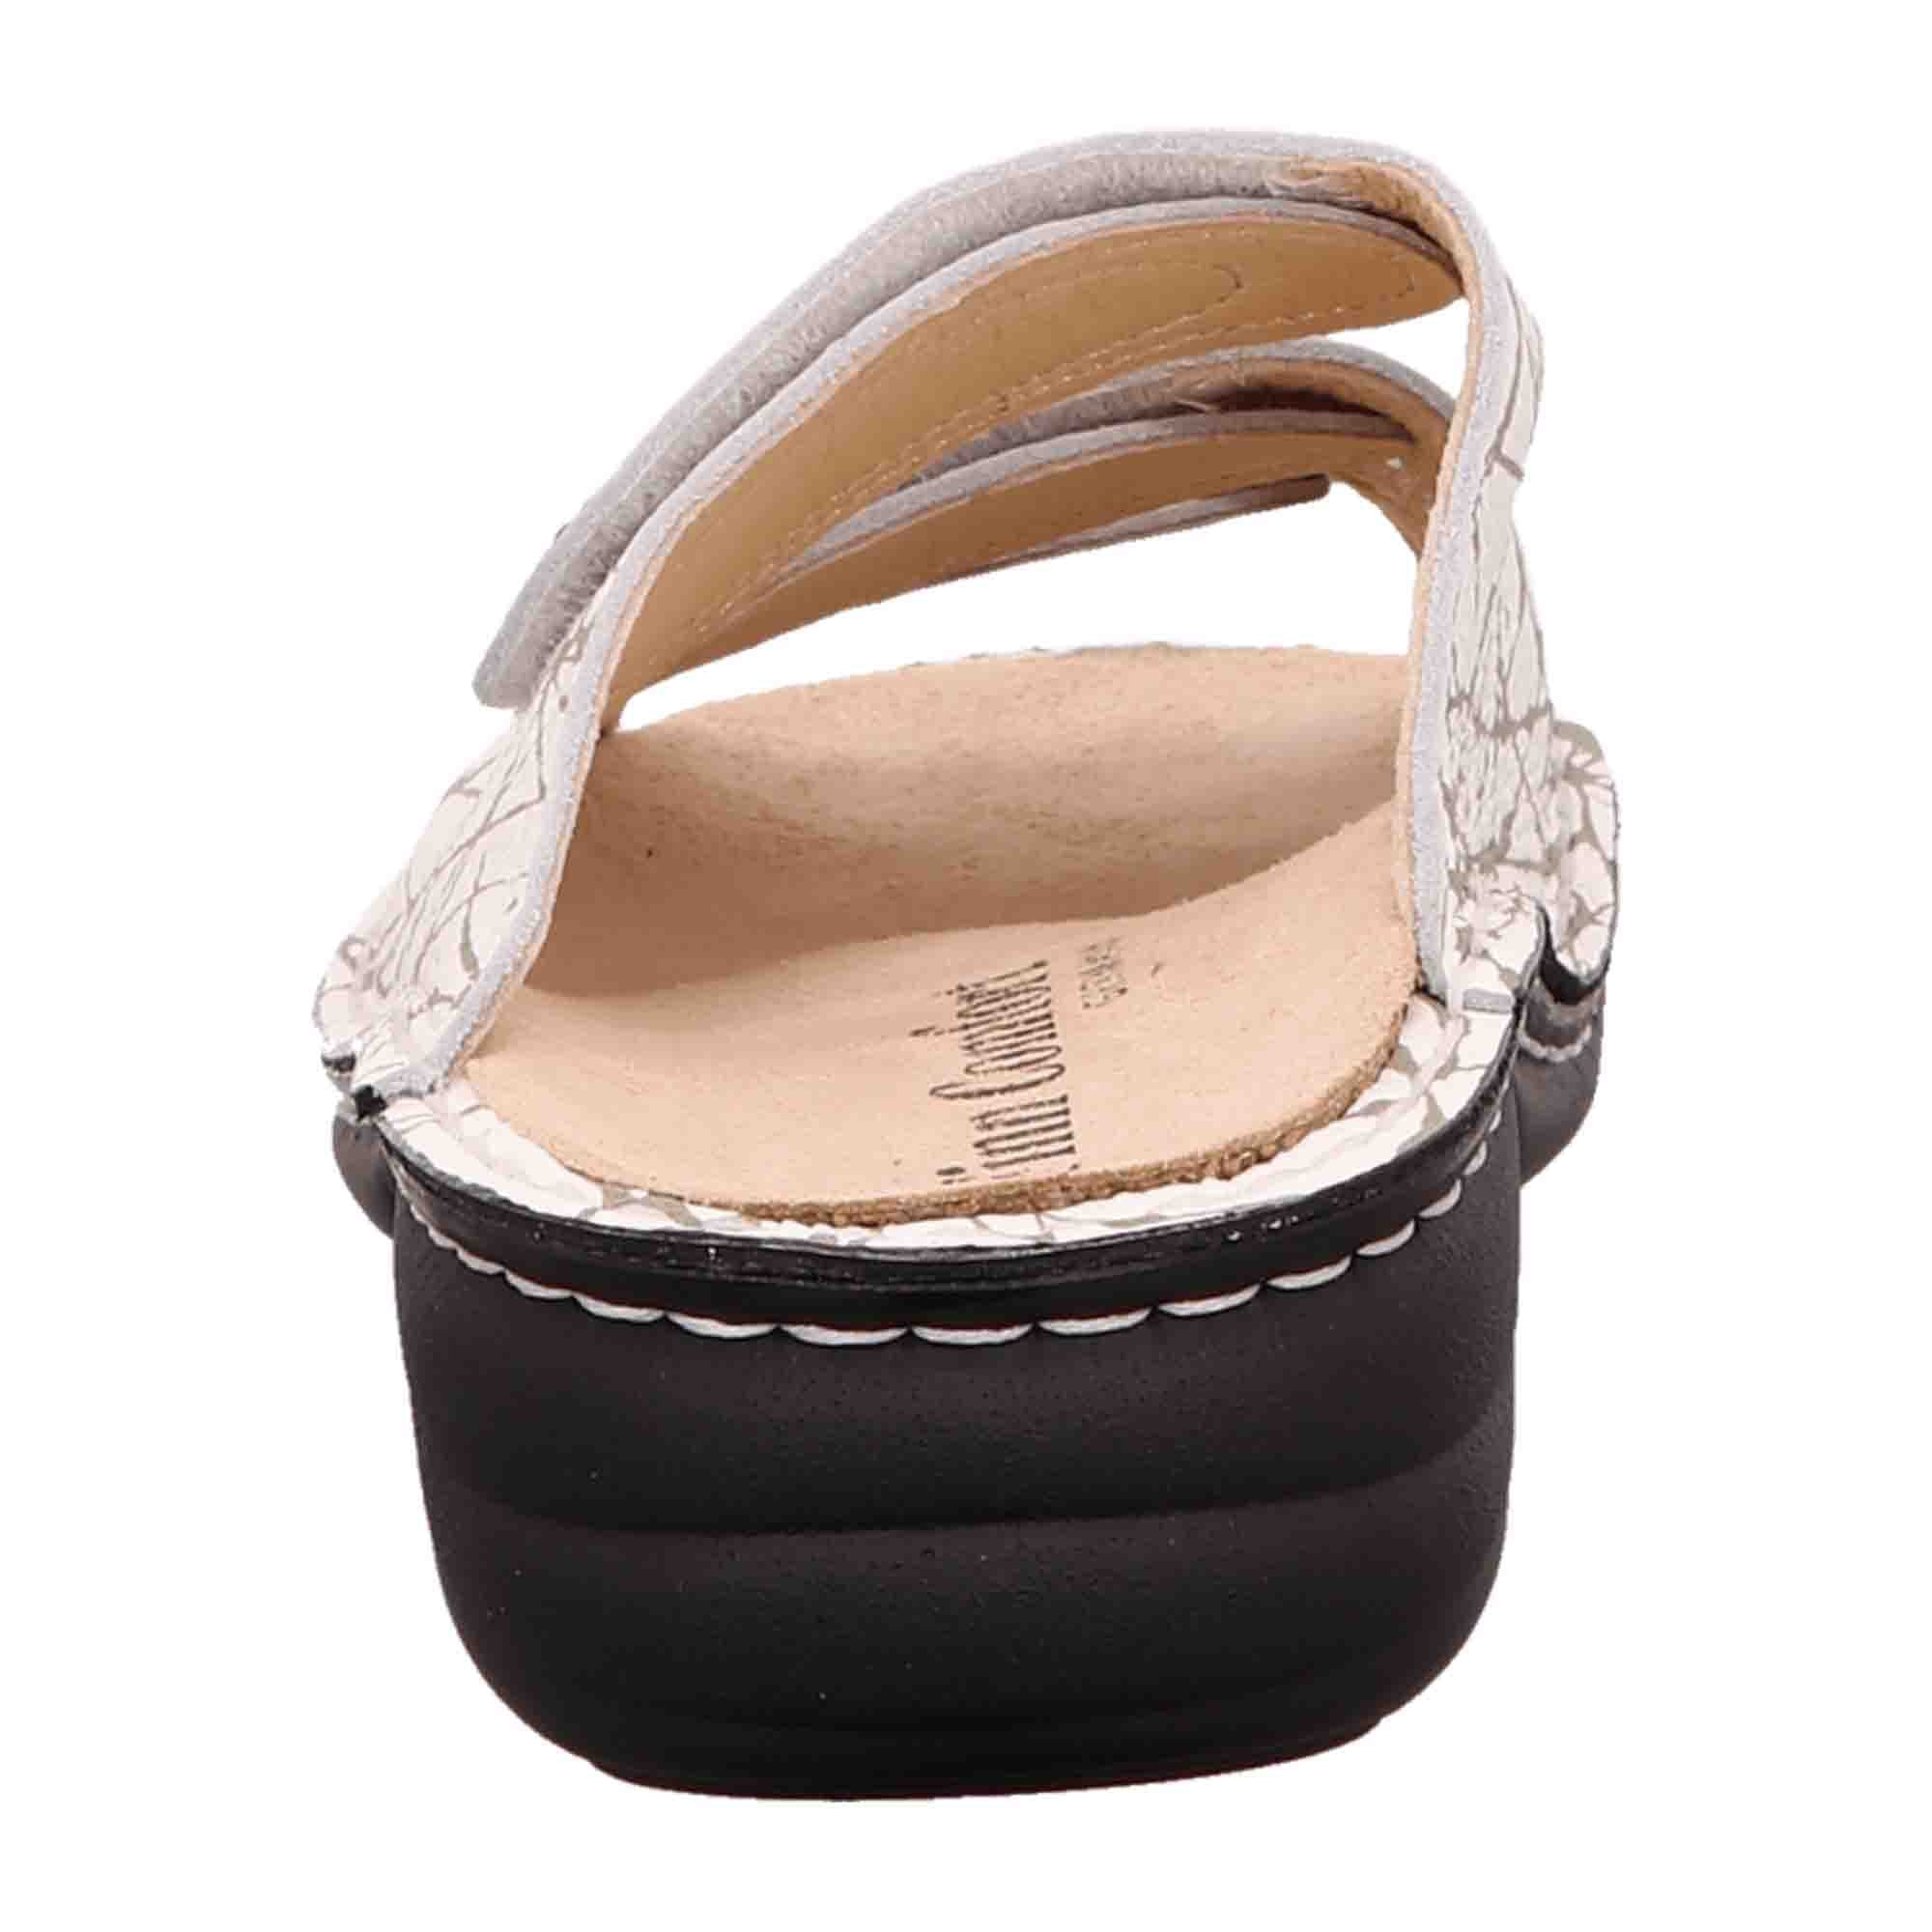 Finn Comfort Hellas Nature White Leather Slide Sandals for Women - Stylish & Comfortable Summer Footwear